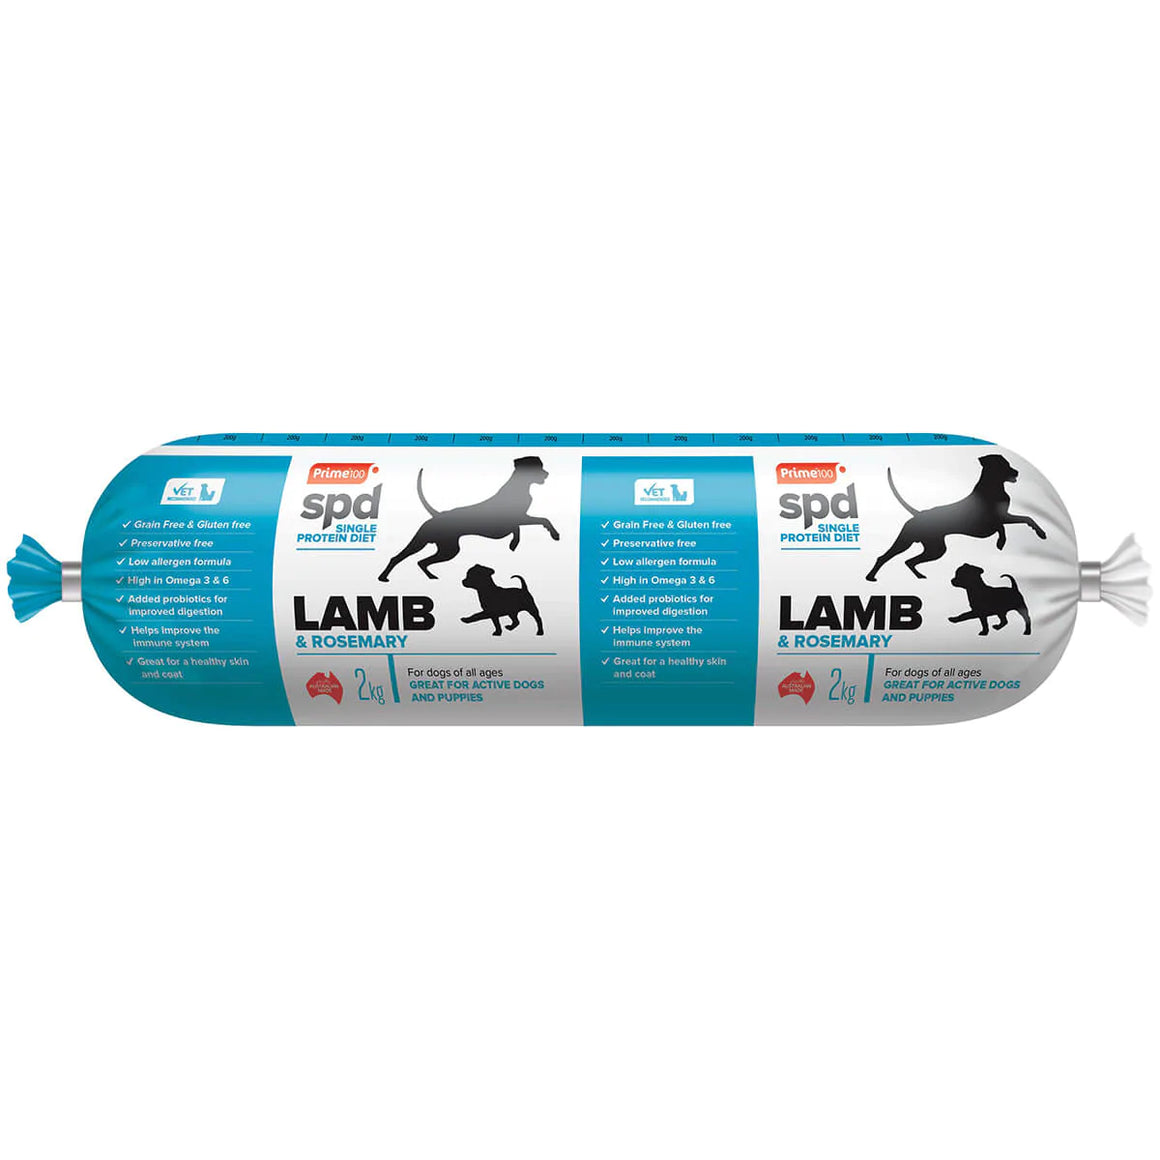 Prime100 SPD* Lamb & Rosemary rolls | Pet Food Leaders